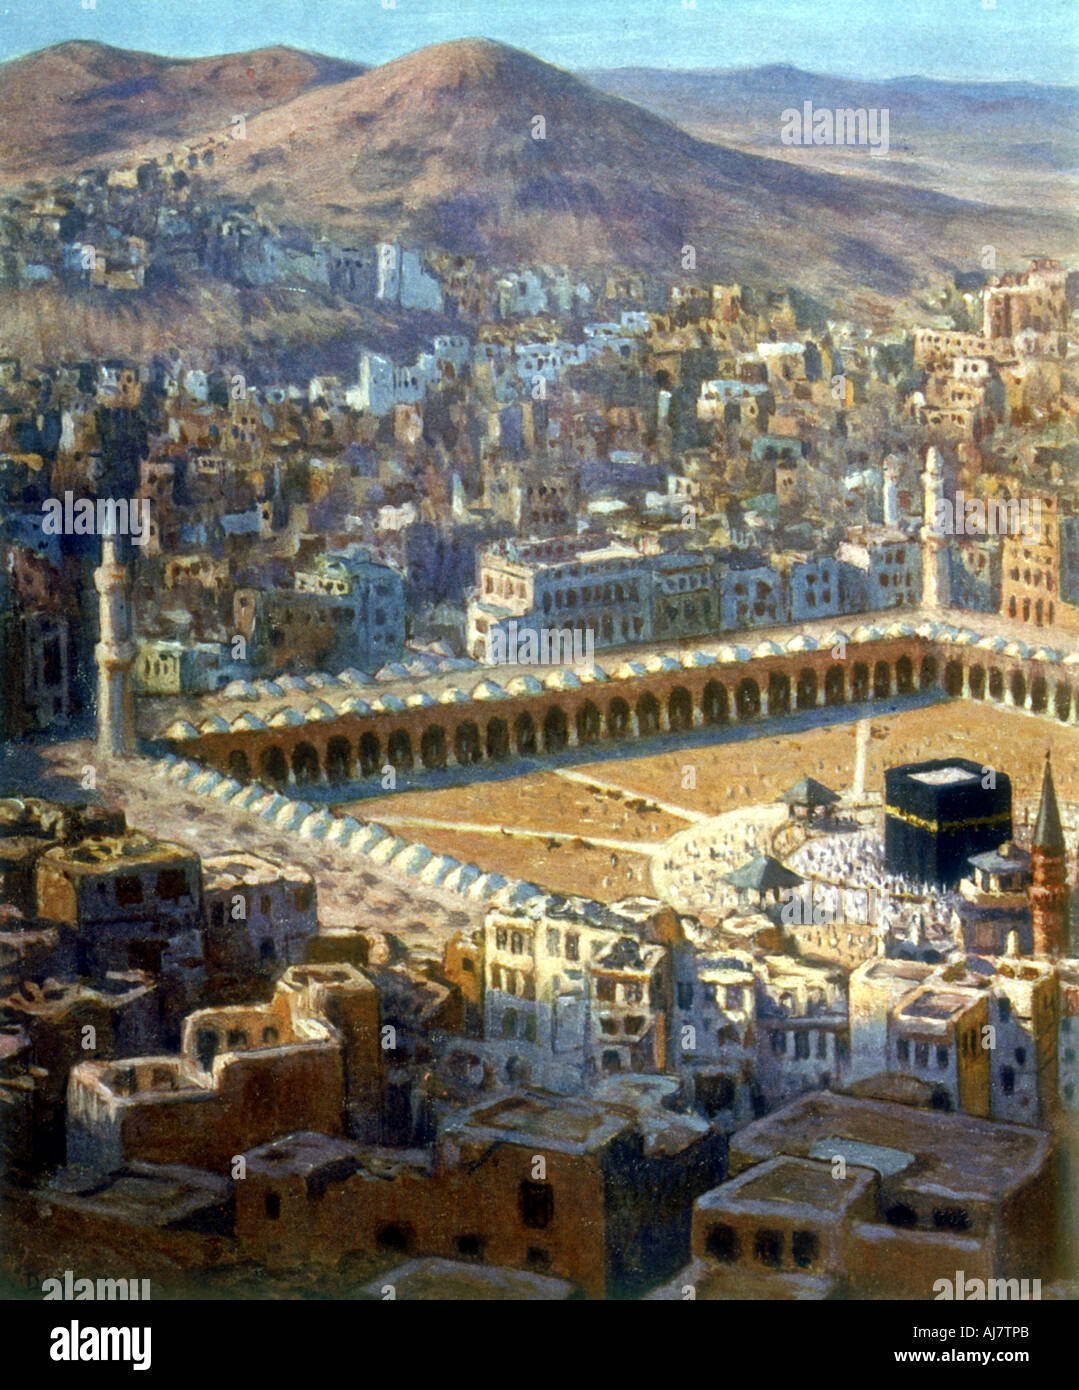 'View of Mecca', from La Vie de Mohammed, Prophete d'Allah, c1880-c1920. Artist: Etienne Dinet Stock Photo